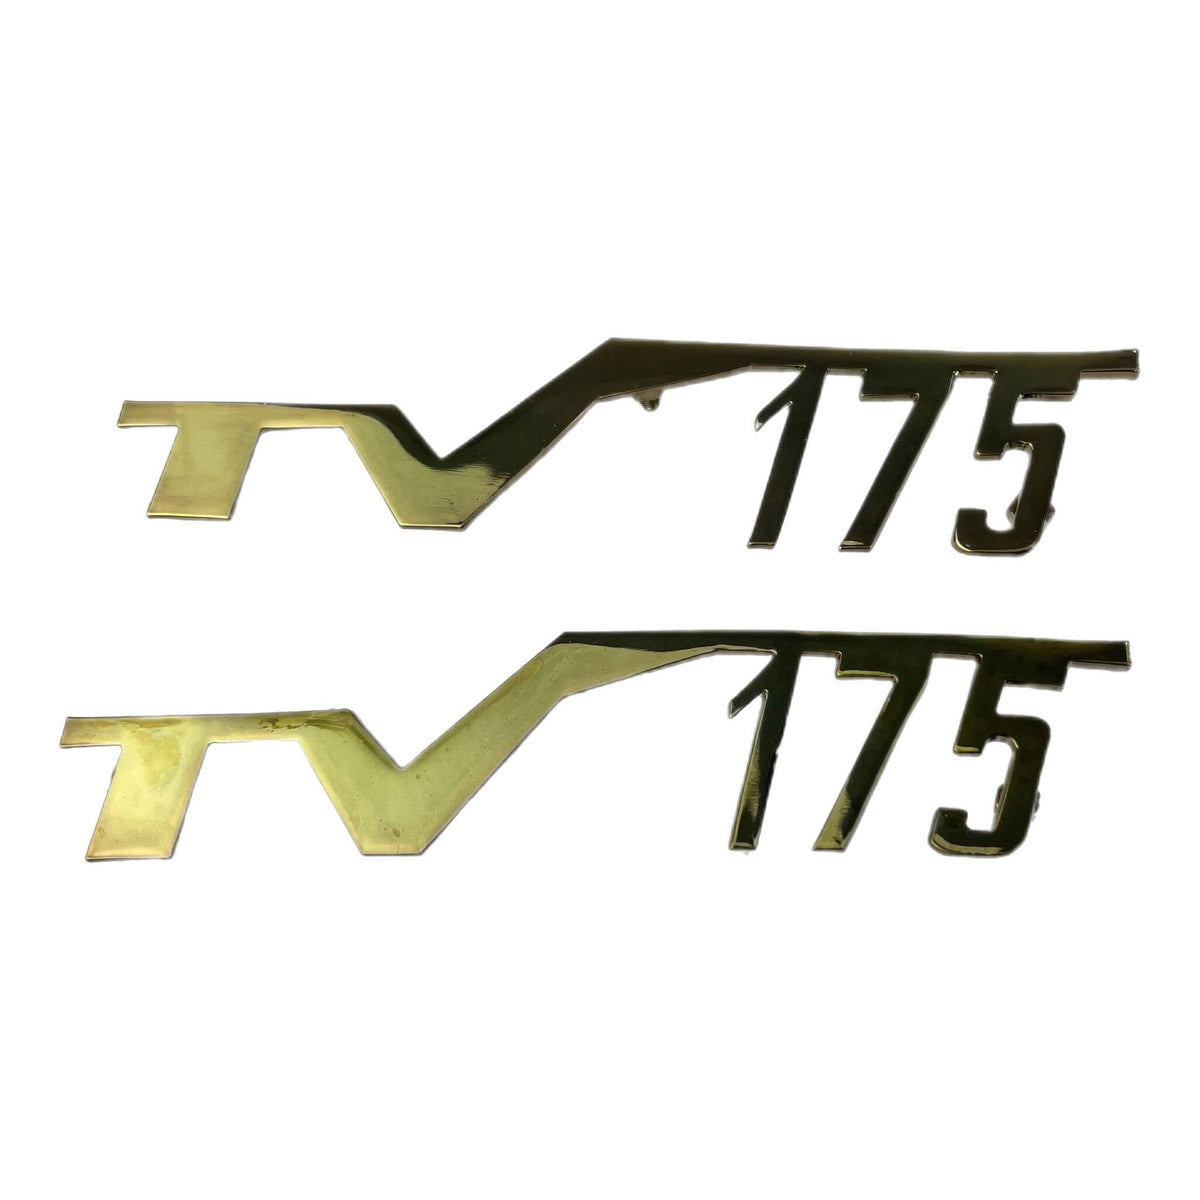 Lambretta Series 2 TV 175 Side Panel Badge Pair - Gold Chrome